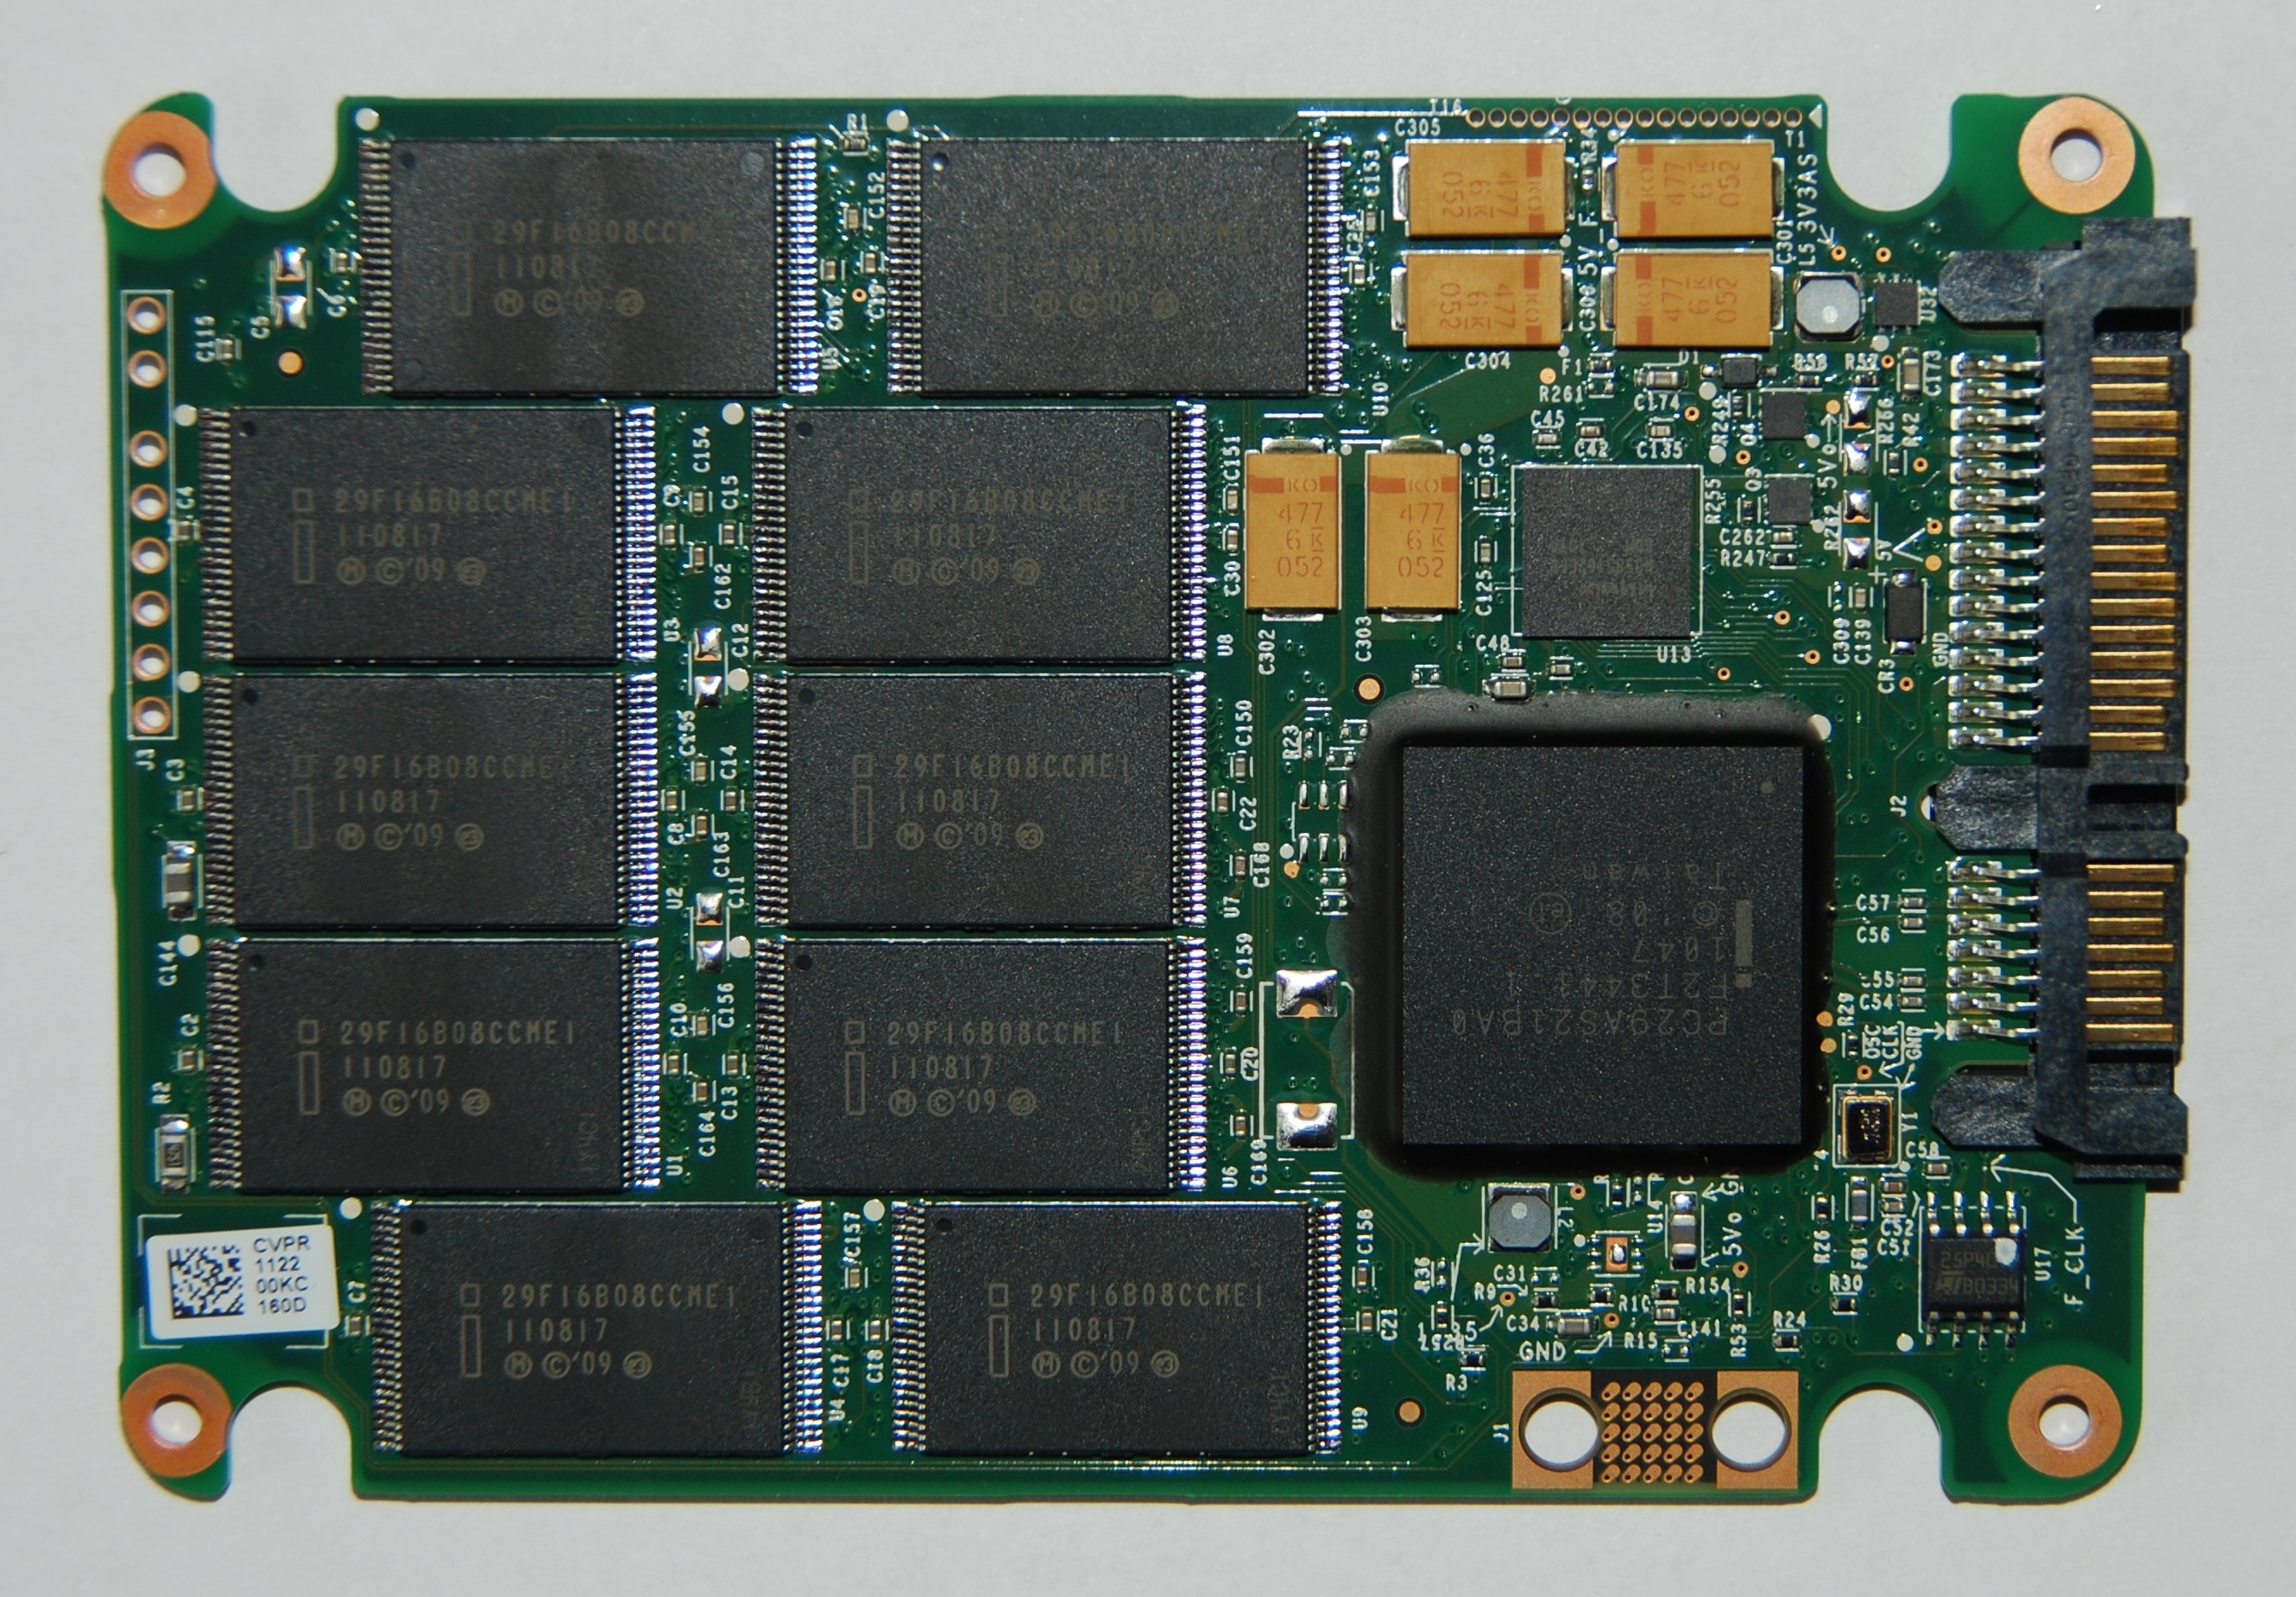 Intel 320 Series 160 GB SATA 3.0 Gb-s 2.5-Inch Solid-State Drive 